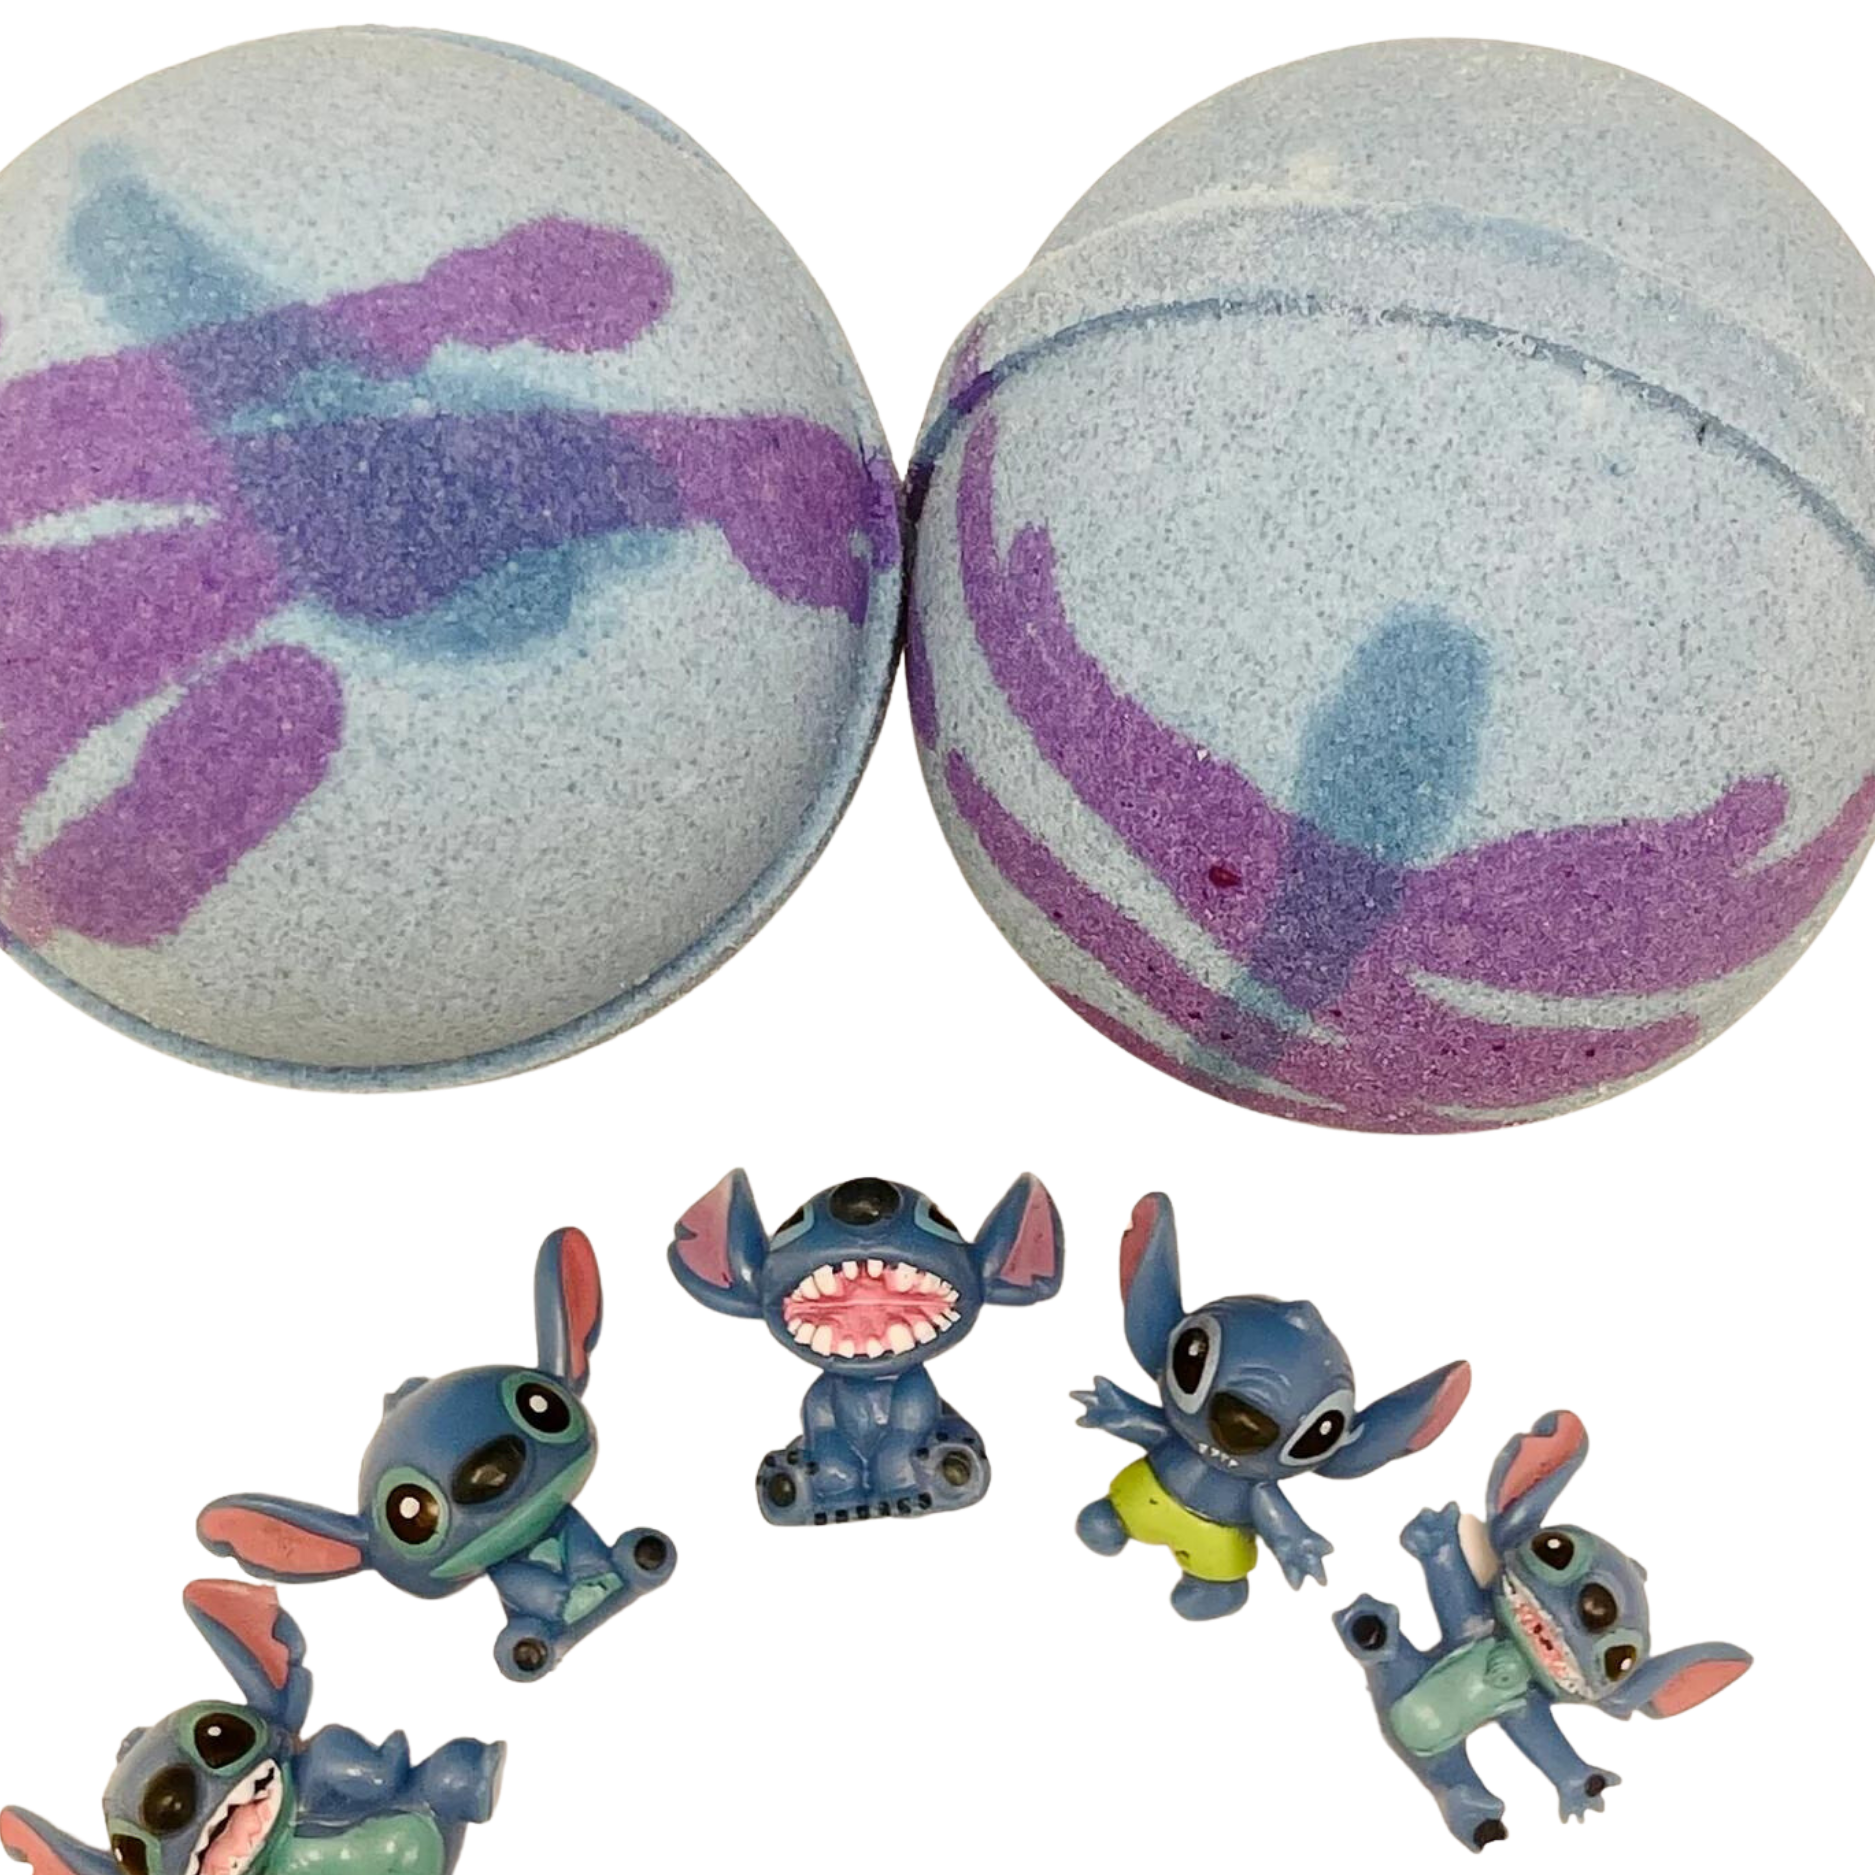 Lilo & Stitch Characters - Giant Bomb